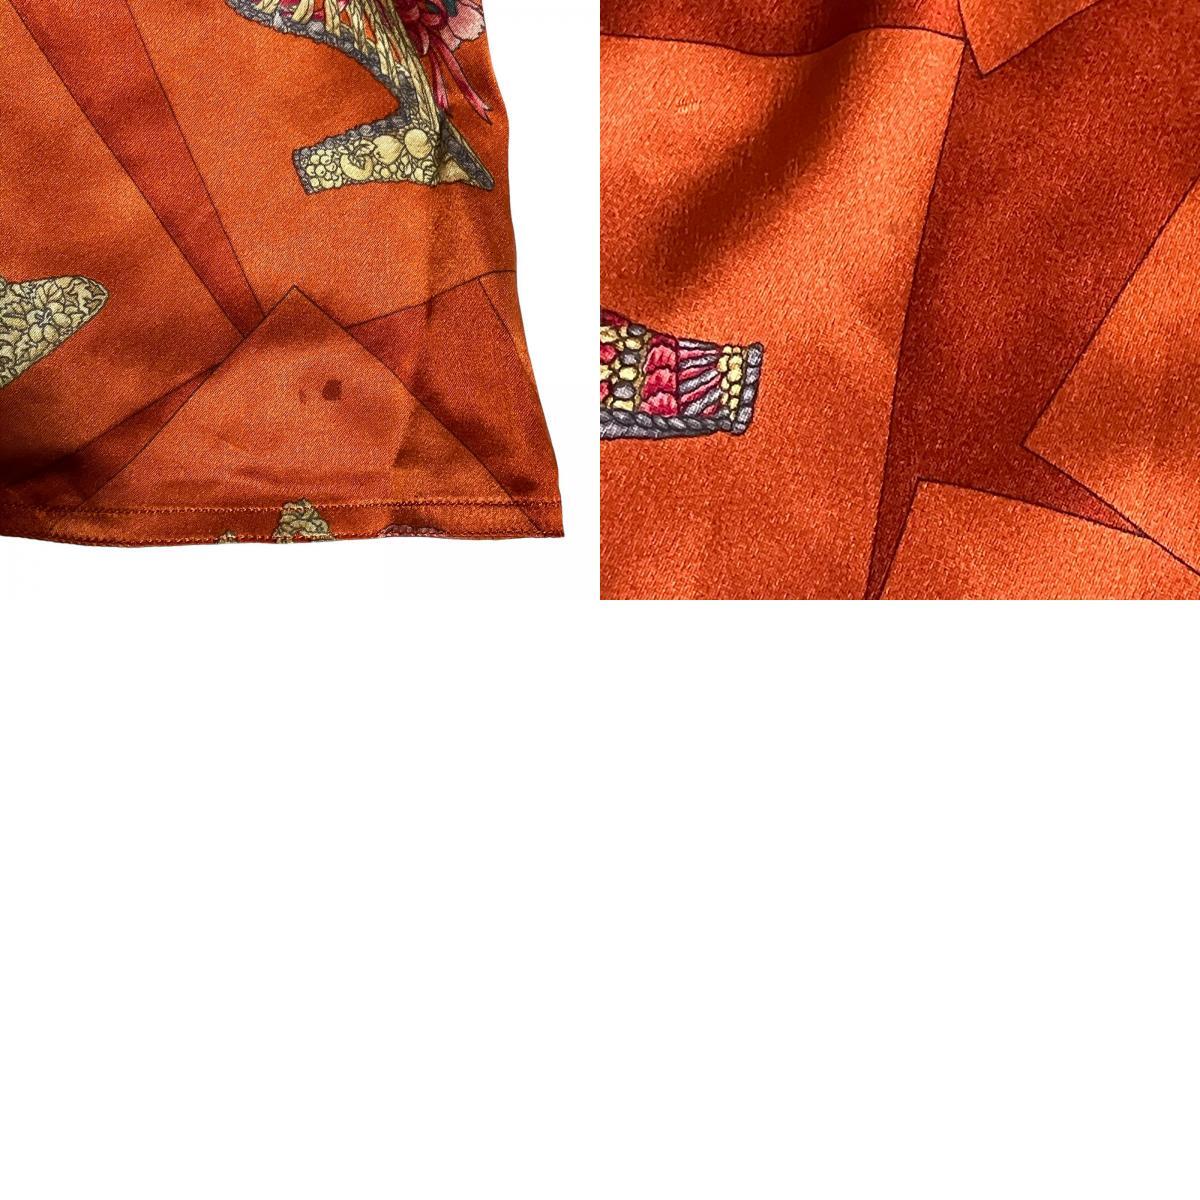 Salvatore Ferragamo Ferragamo shirt long sleeve silk * some stains have cardigan * quality inscription none reversible orange series lady's size 40